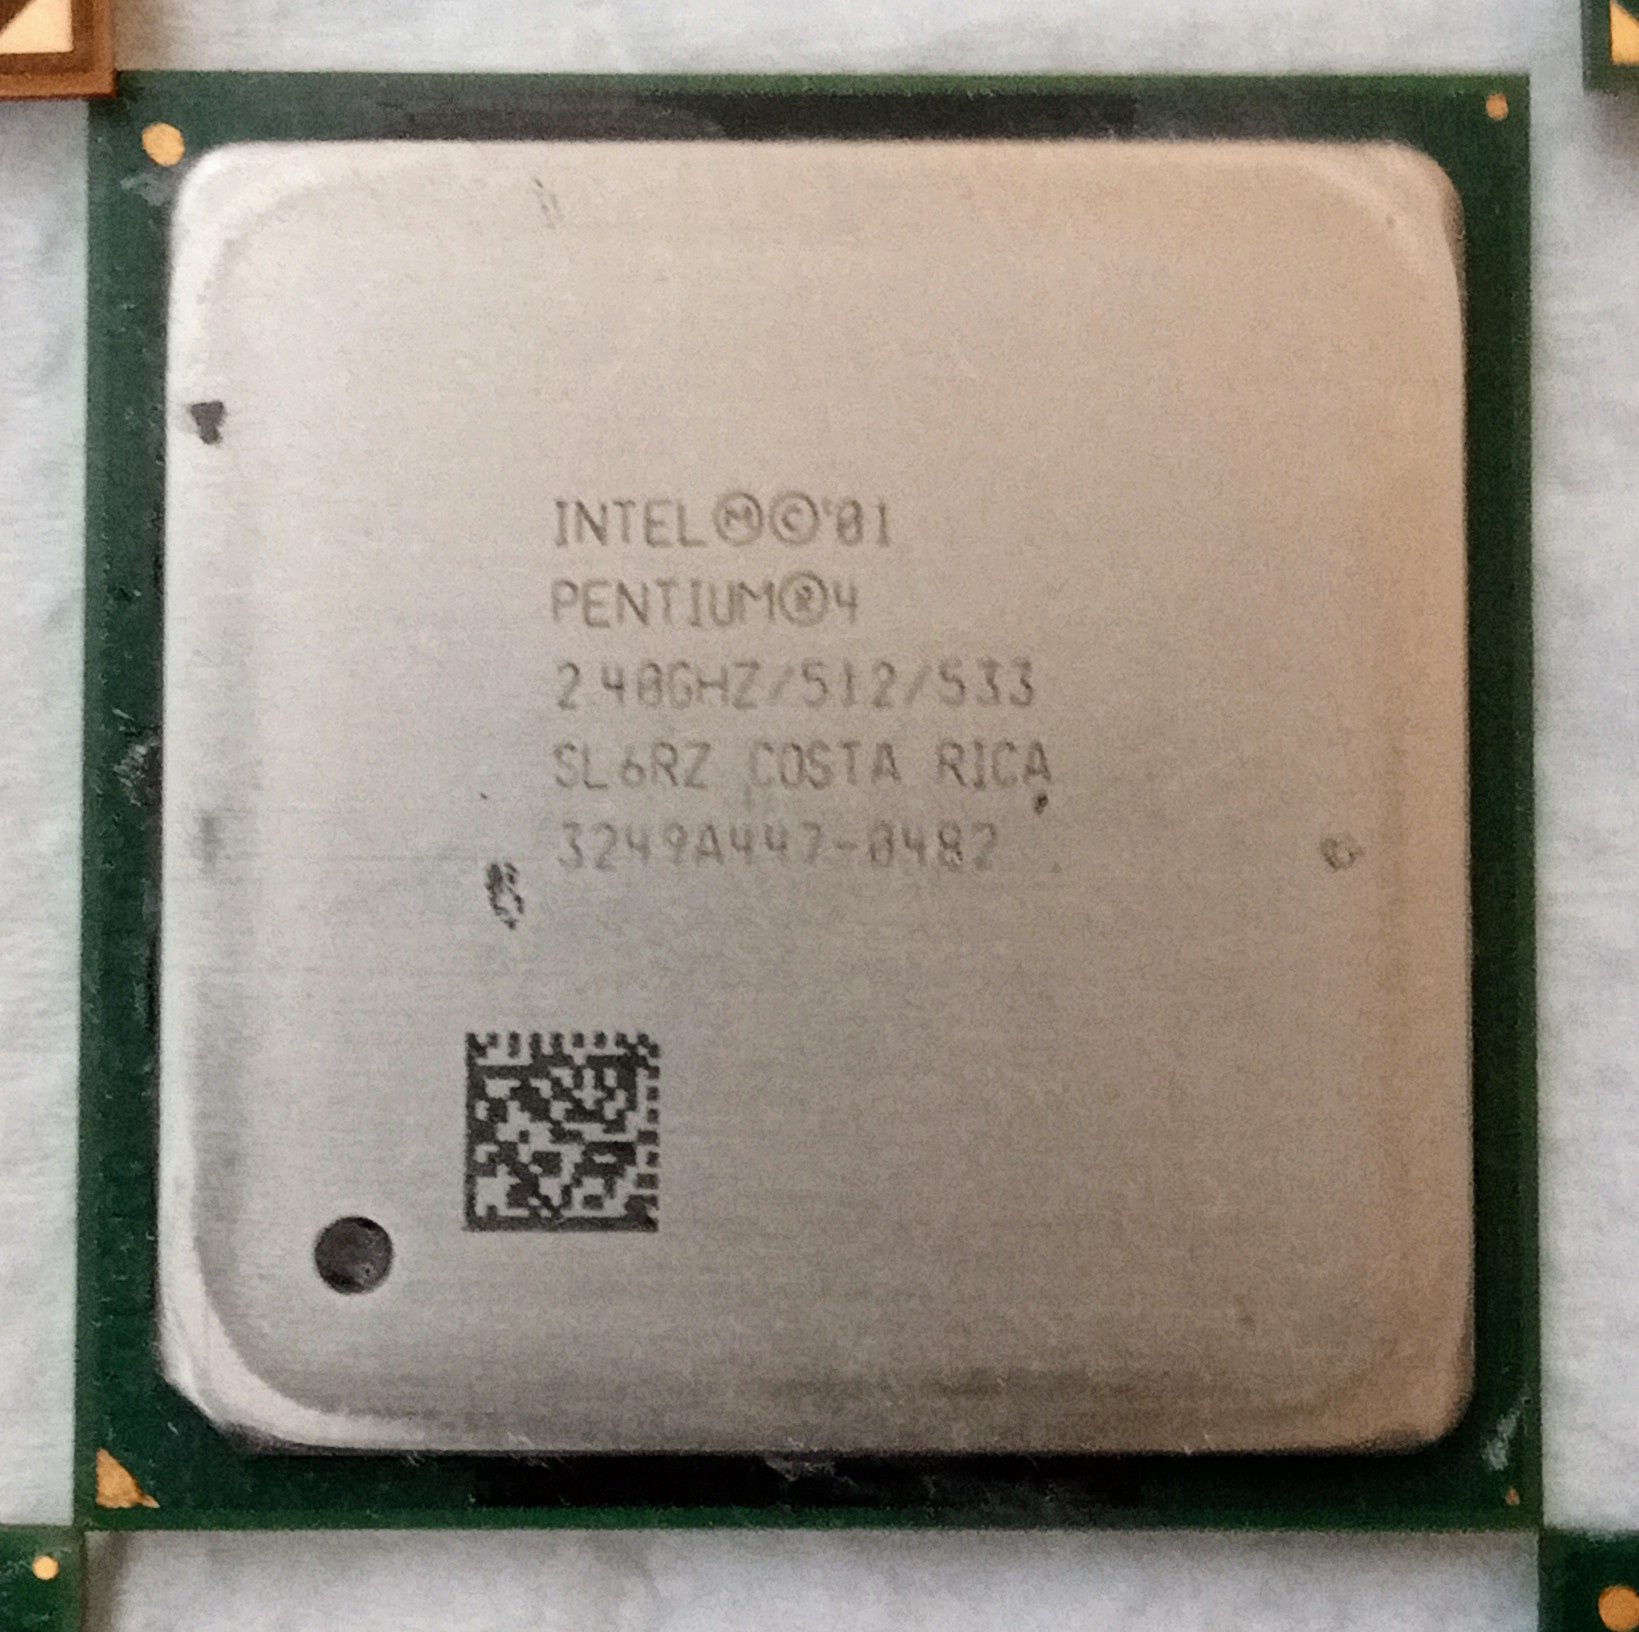 Processadores Intel Pentium 4 e AMD Athlon XP 2000+